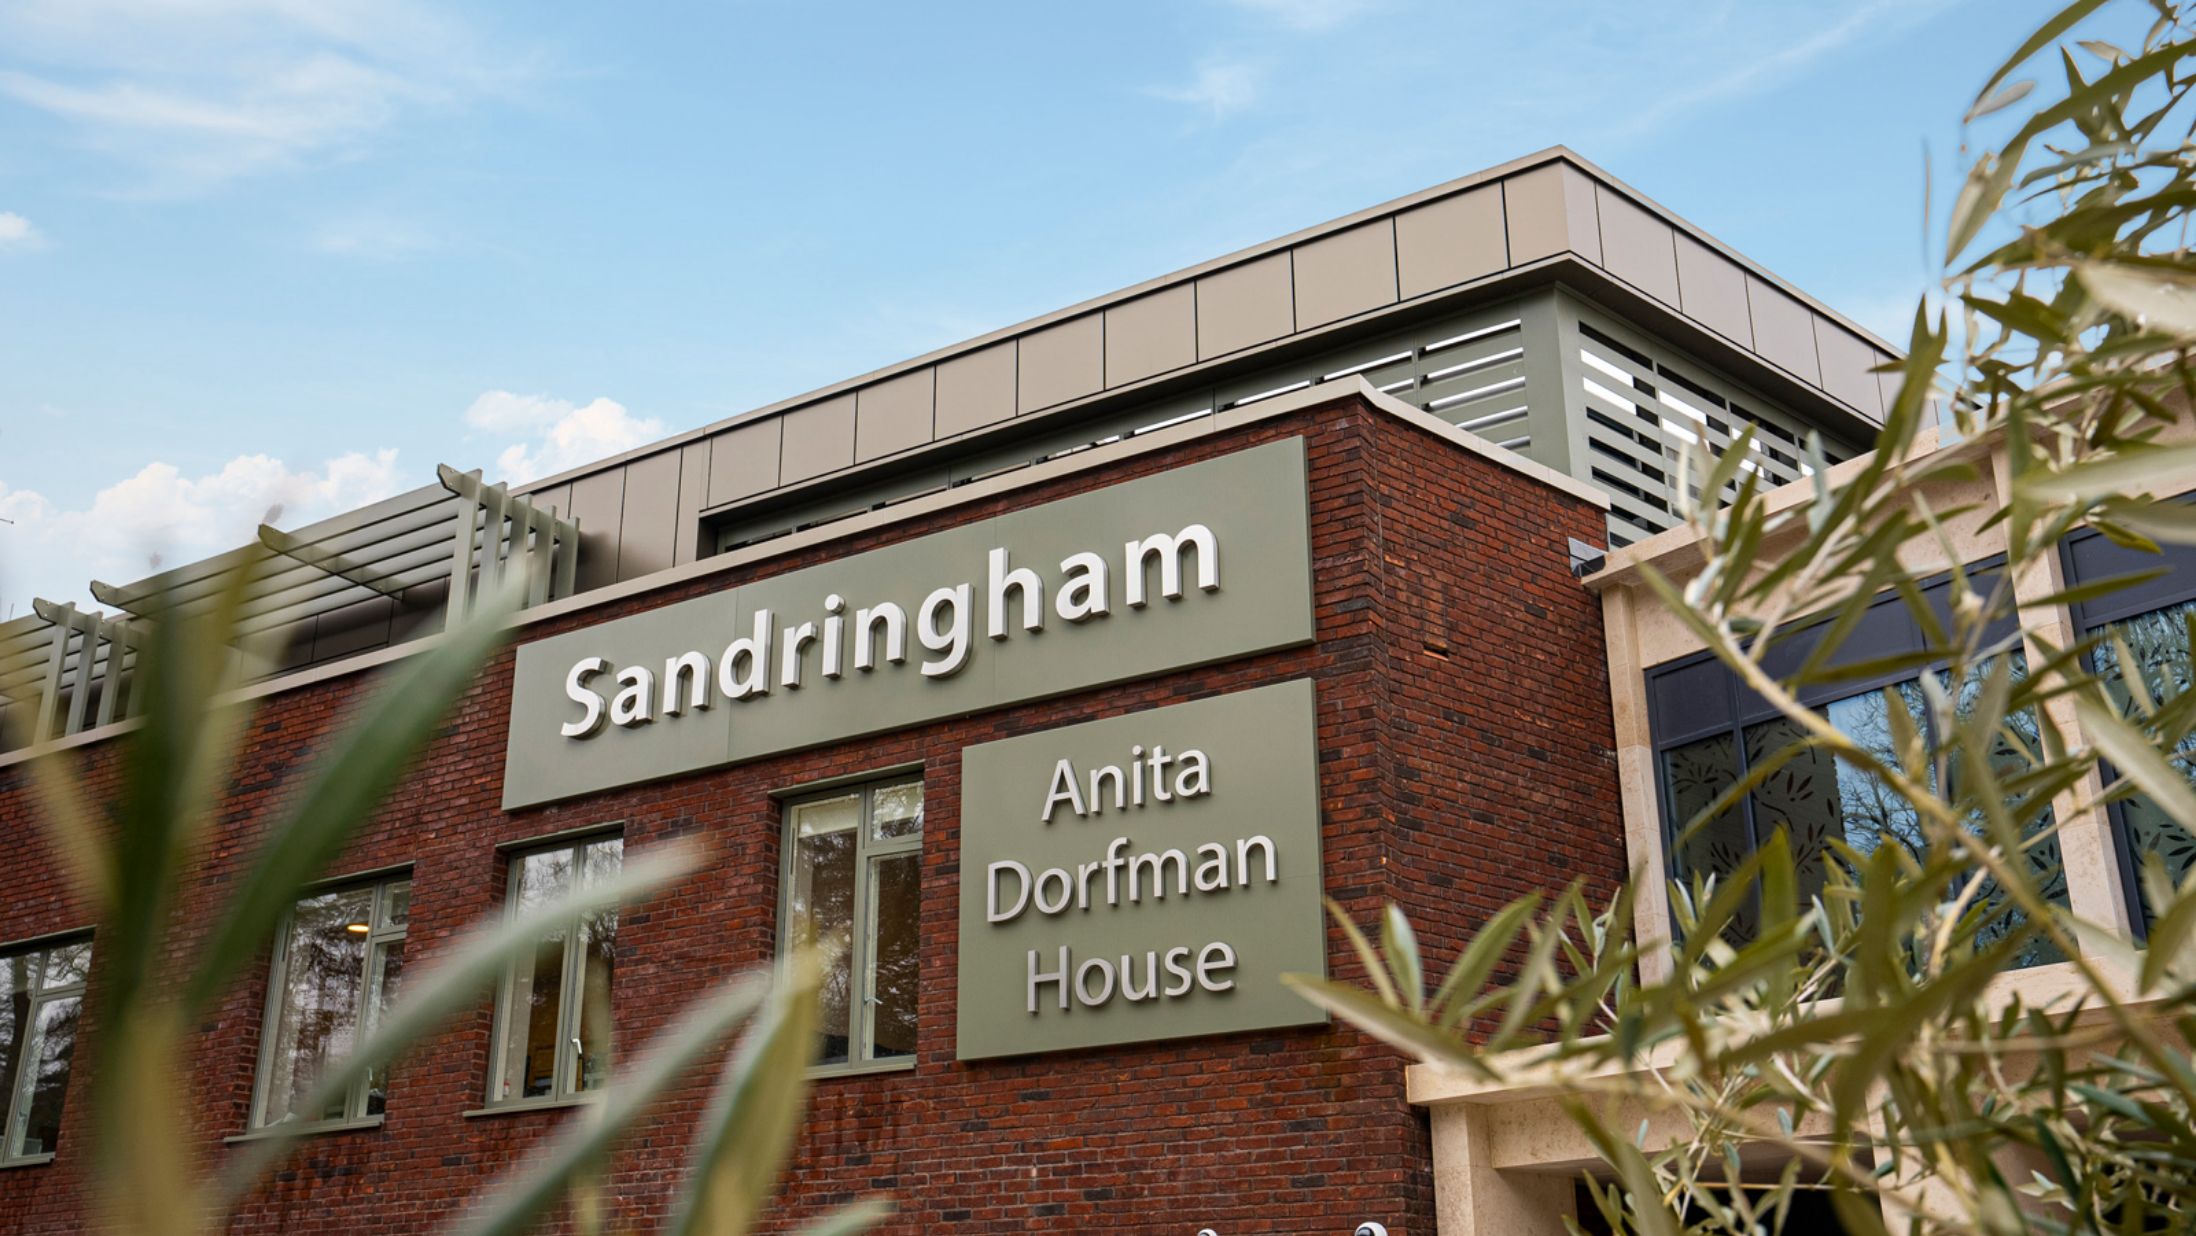 Sandringham Anita Dorfman